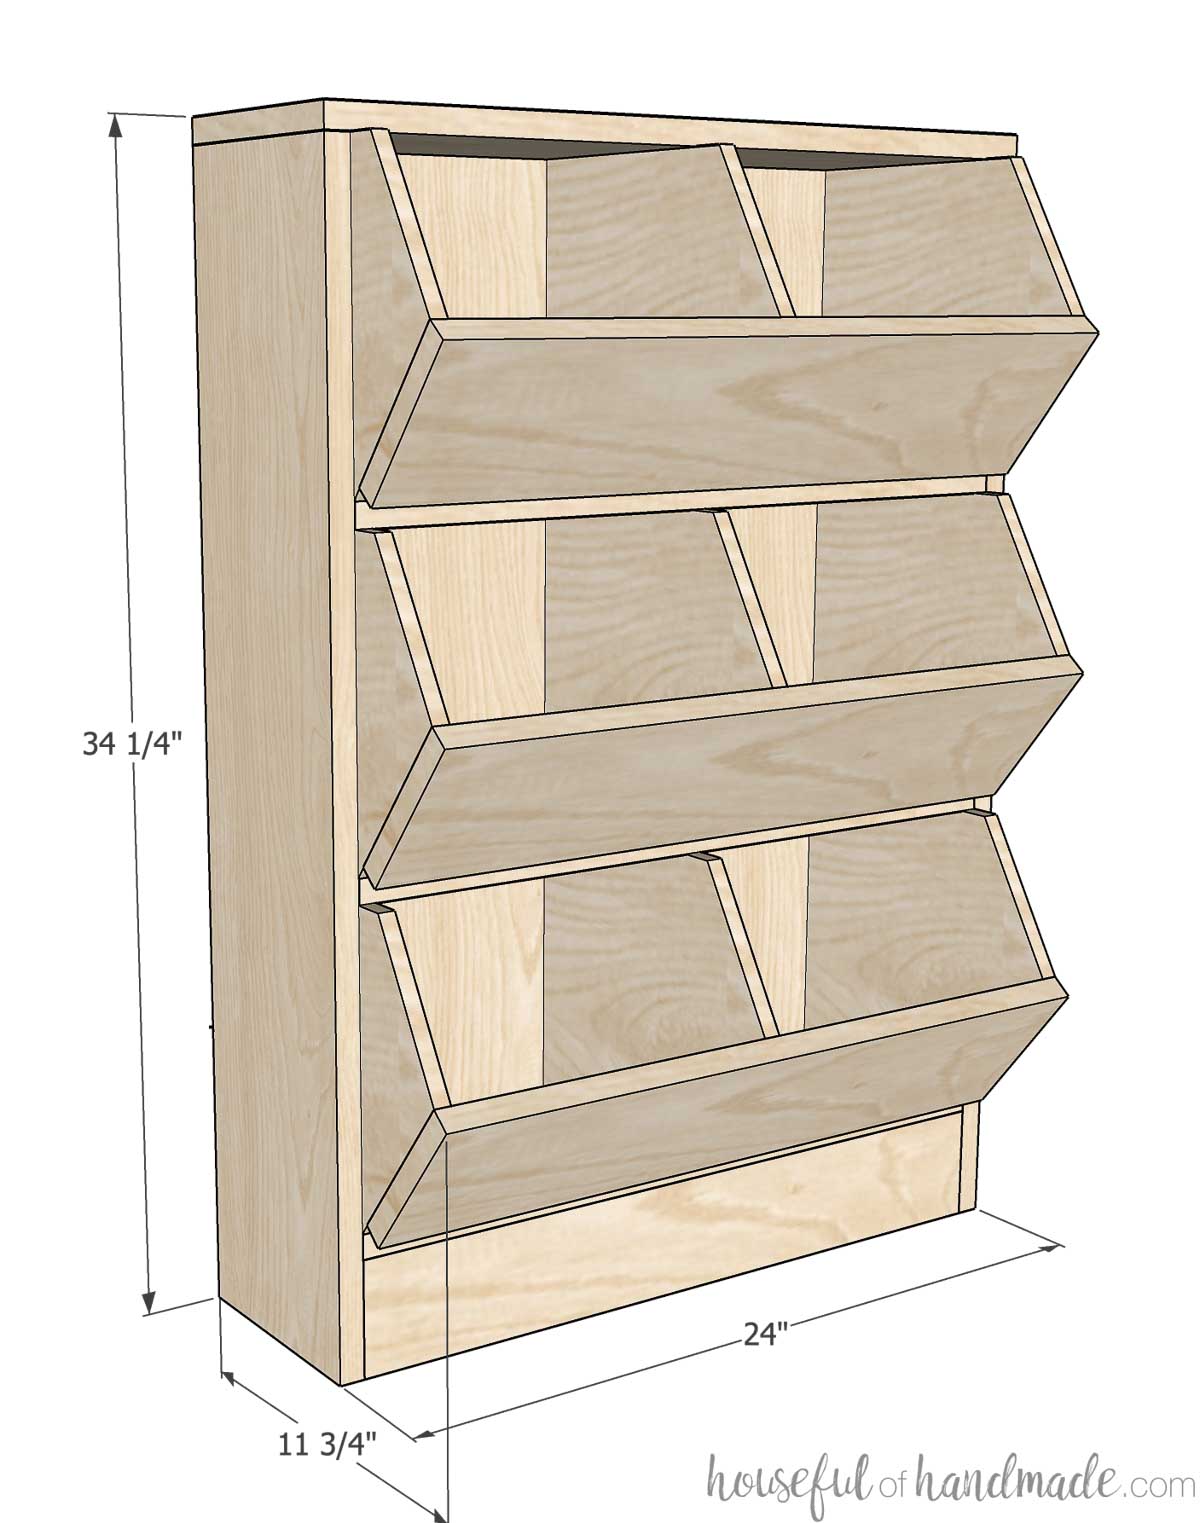 Wooden Spice Rack Build Plans - Houseful of Handmade